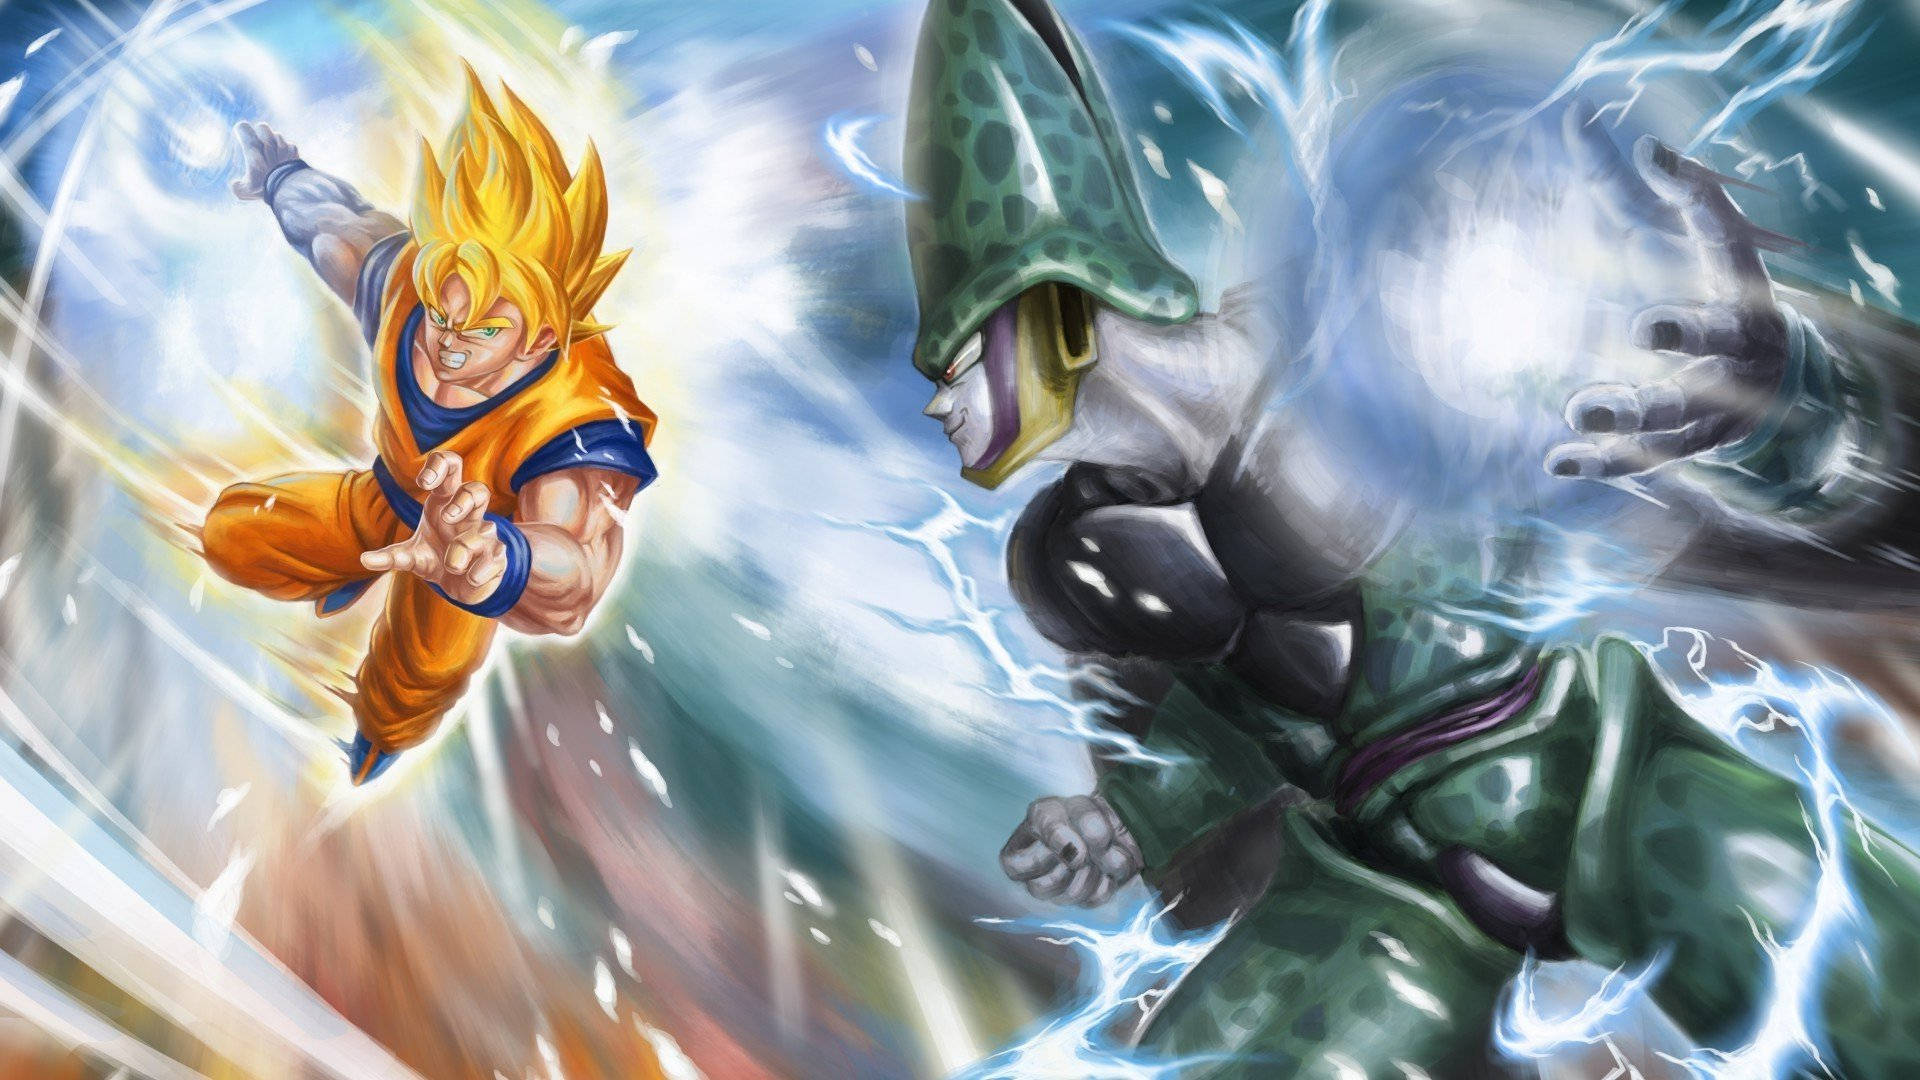 Handyvs. Goku Dragon Ball Super Fanart Wallpaper